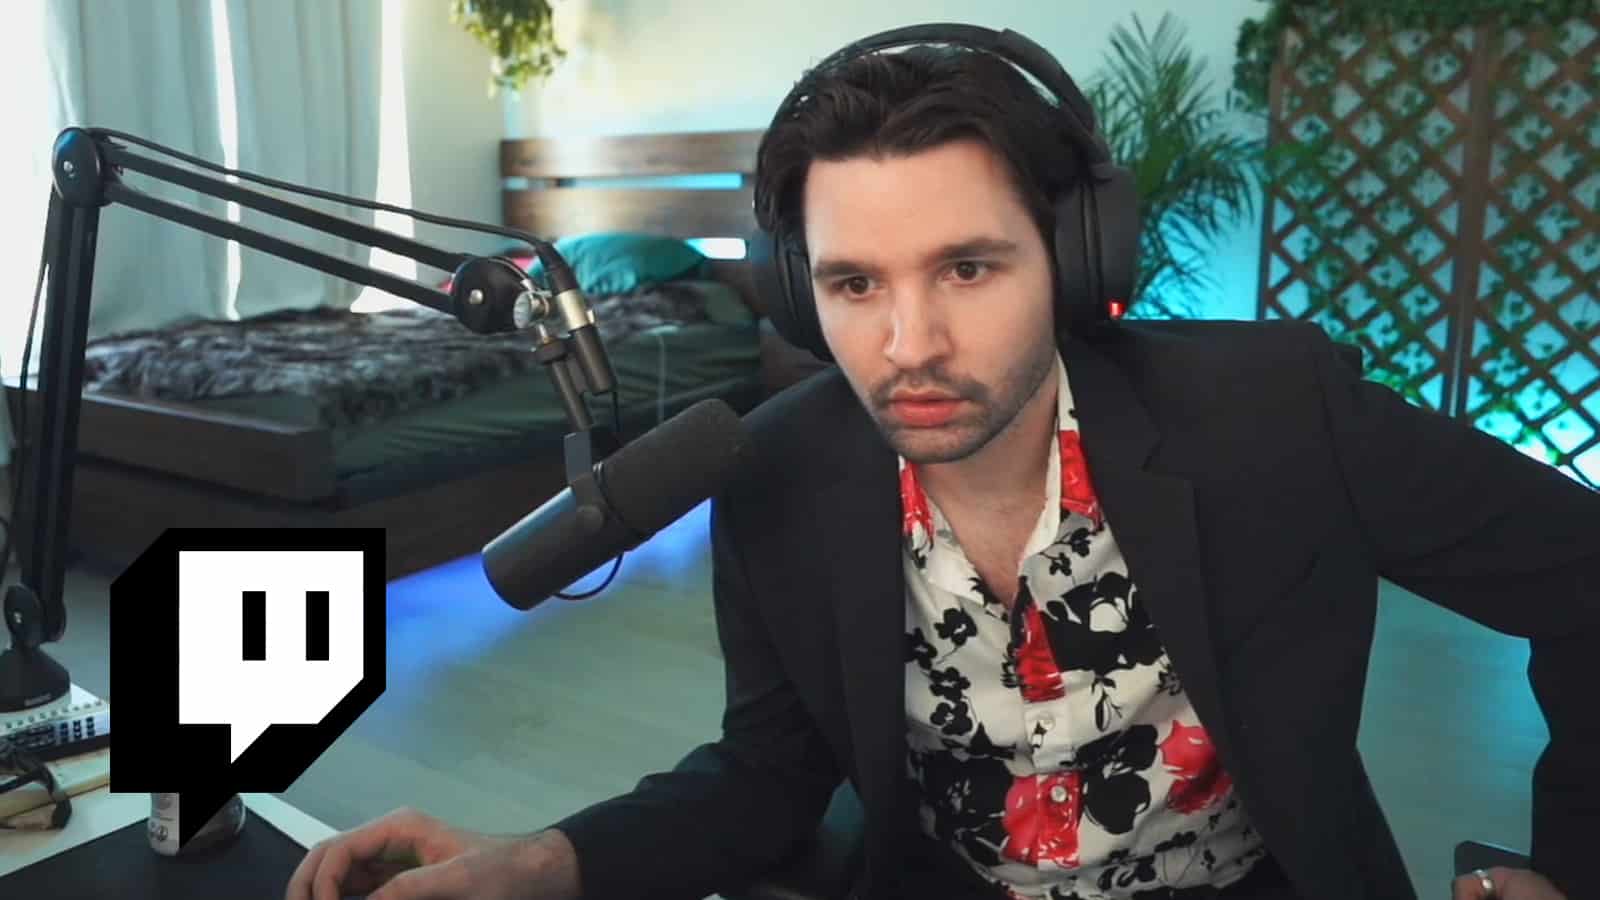 Cyr wearing blazer and floral shirt on Twitch stream